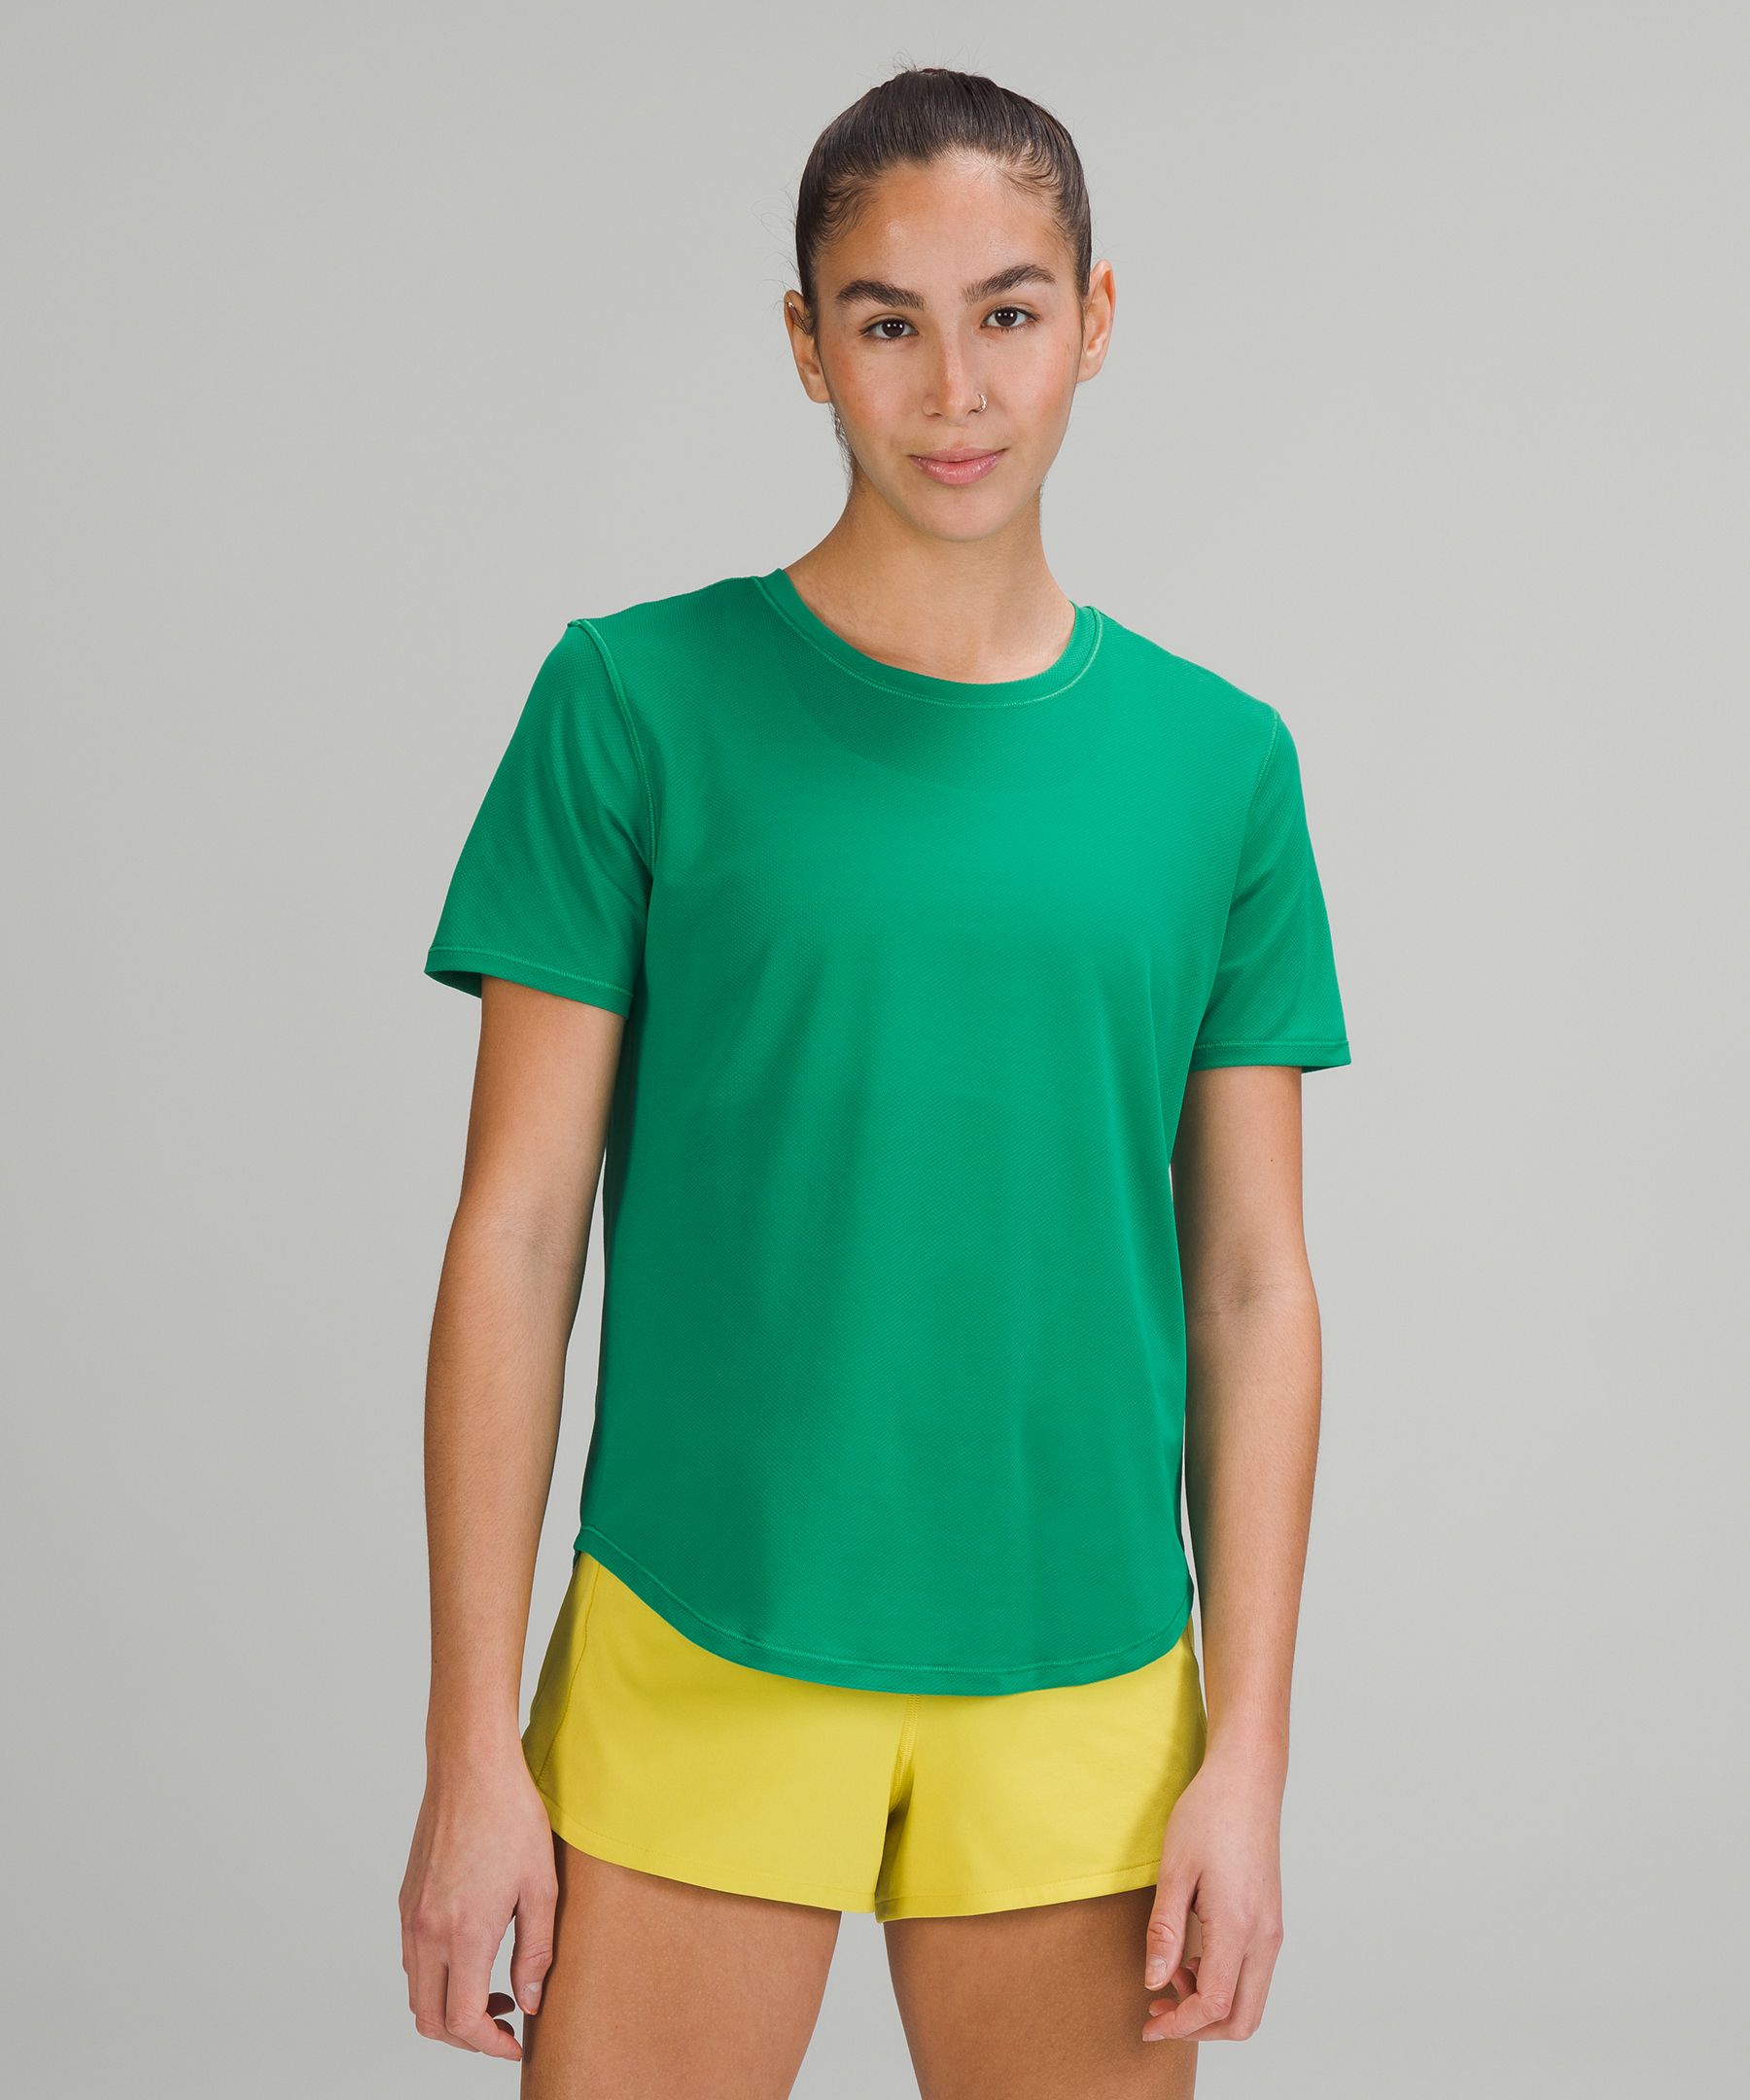 Lululemon High-neck Running And Training T-shirt In Green